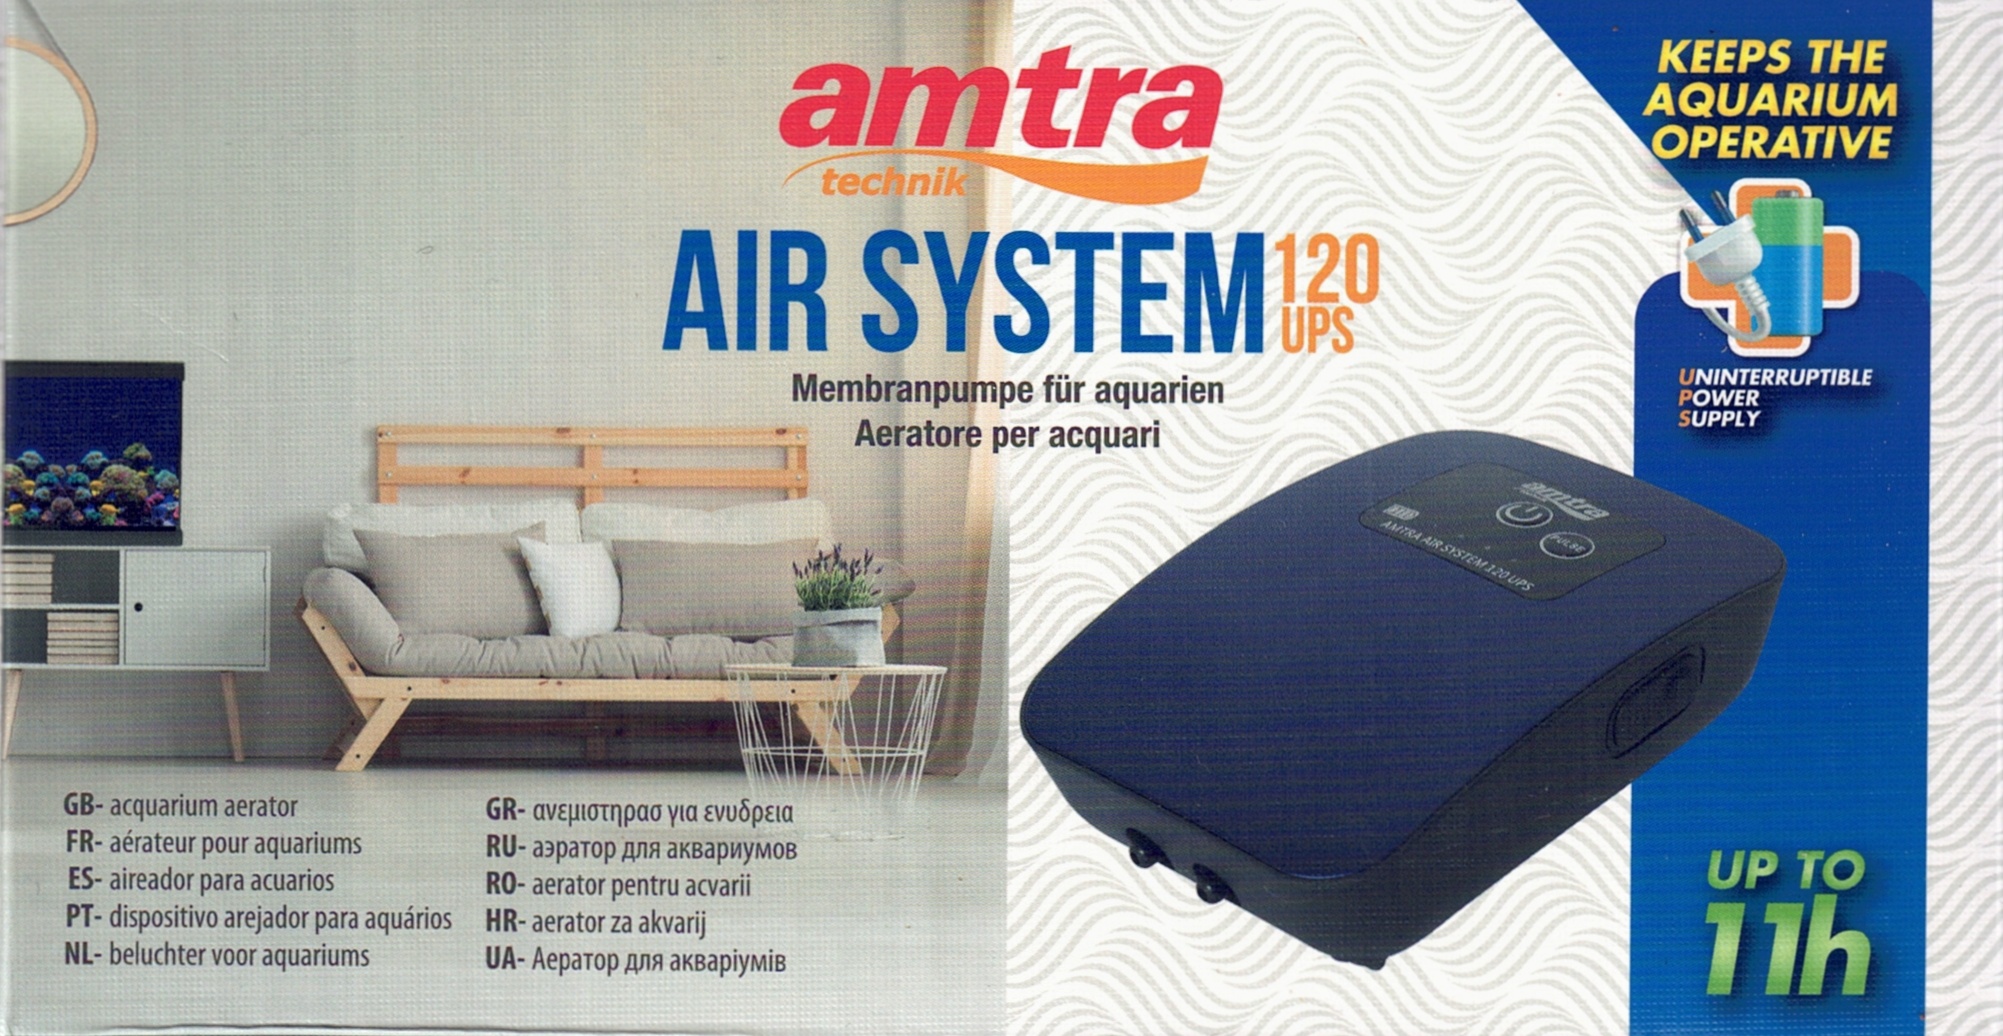 AMTRA AIR SYSTEM UPS